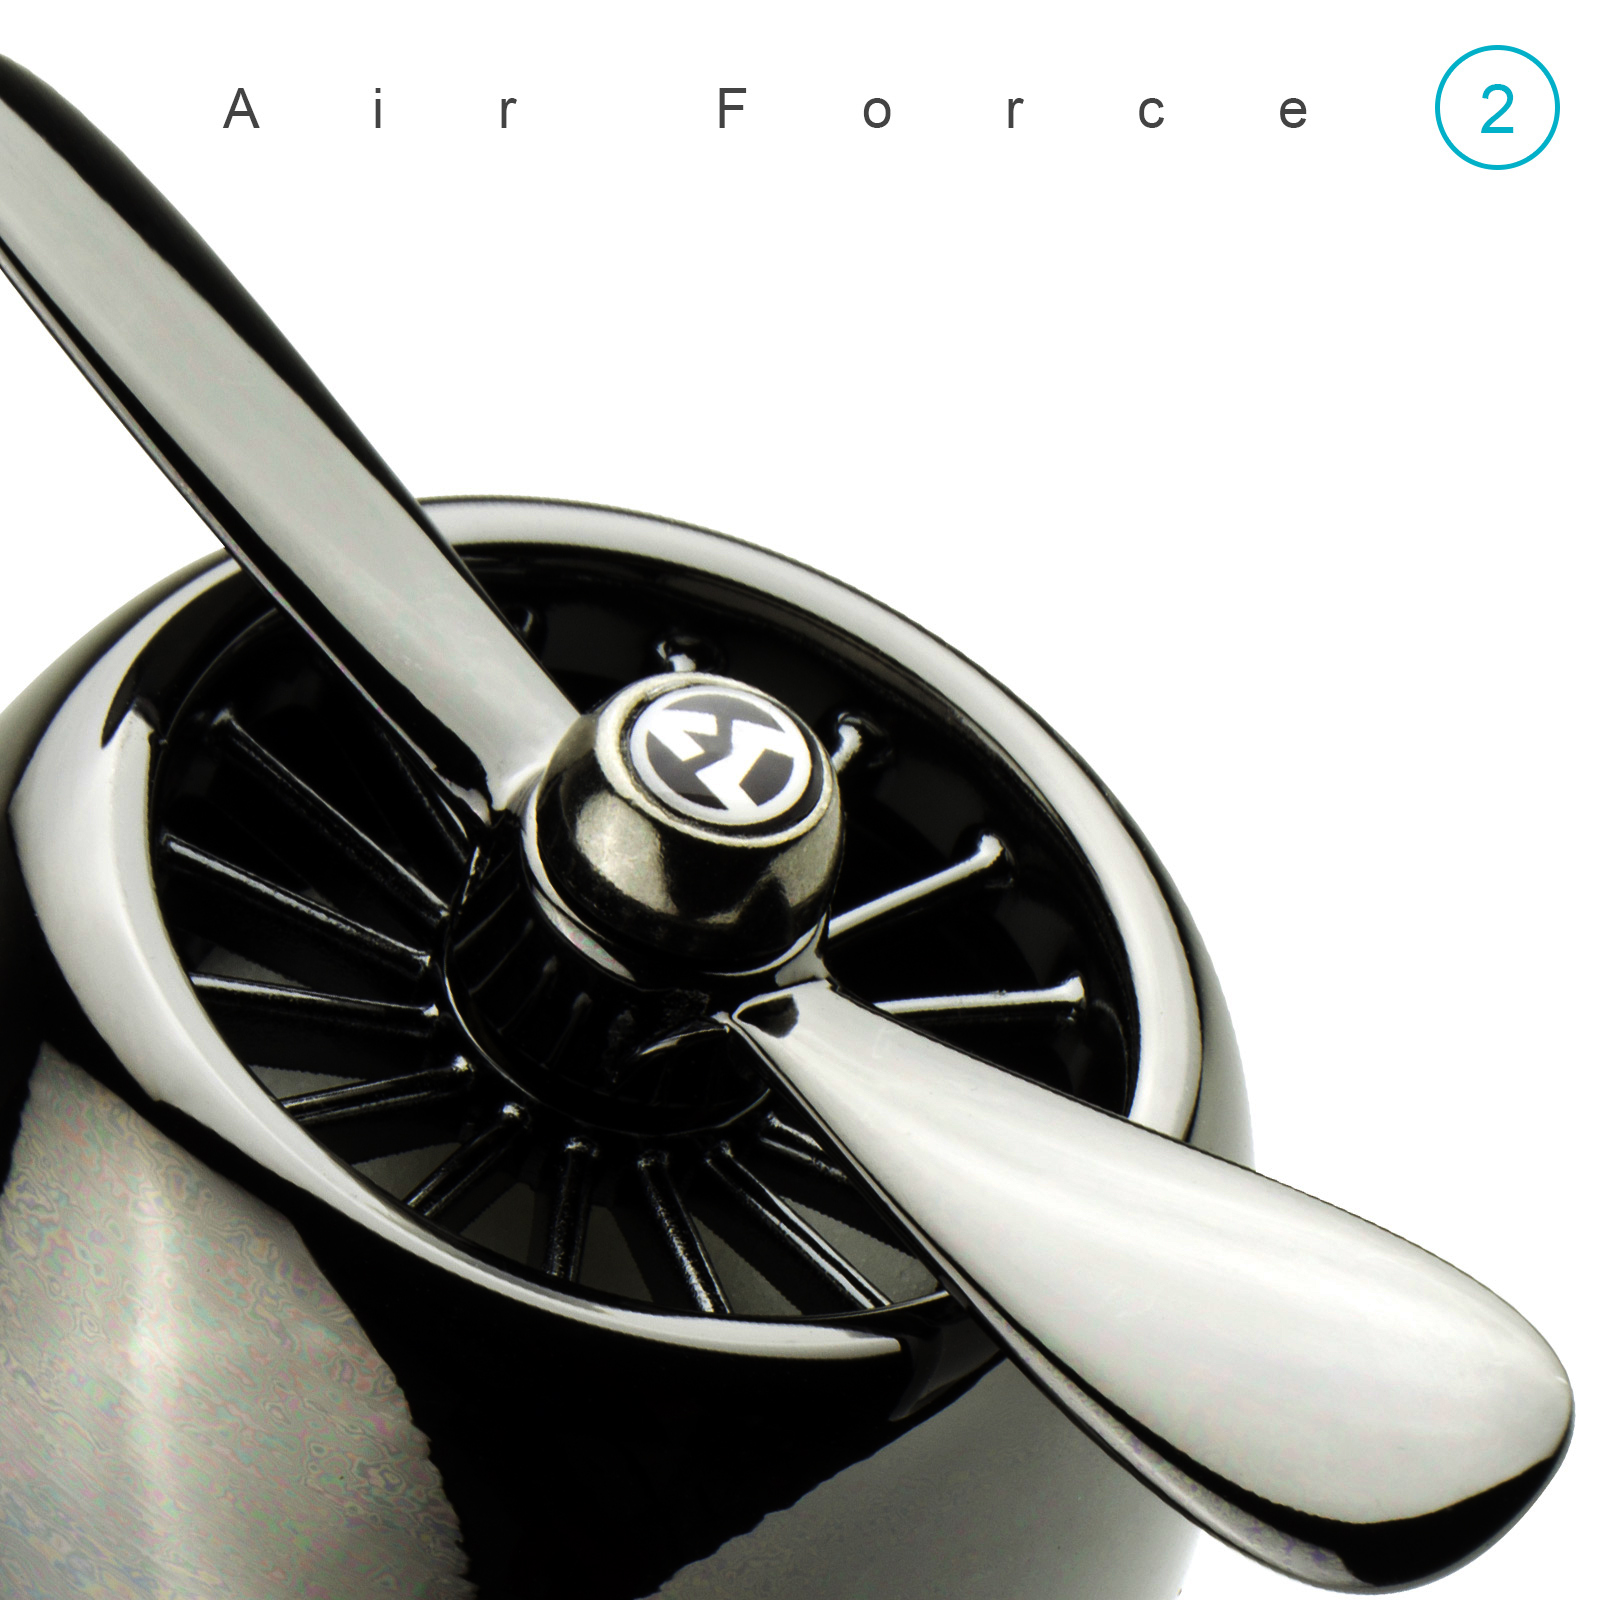 APALUS Car Fragrance Diffuser Vent Clip, Car Air Freshener 